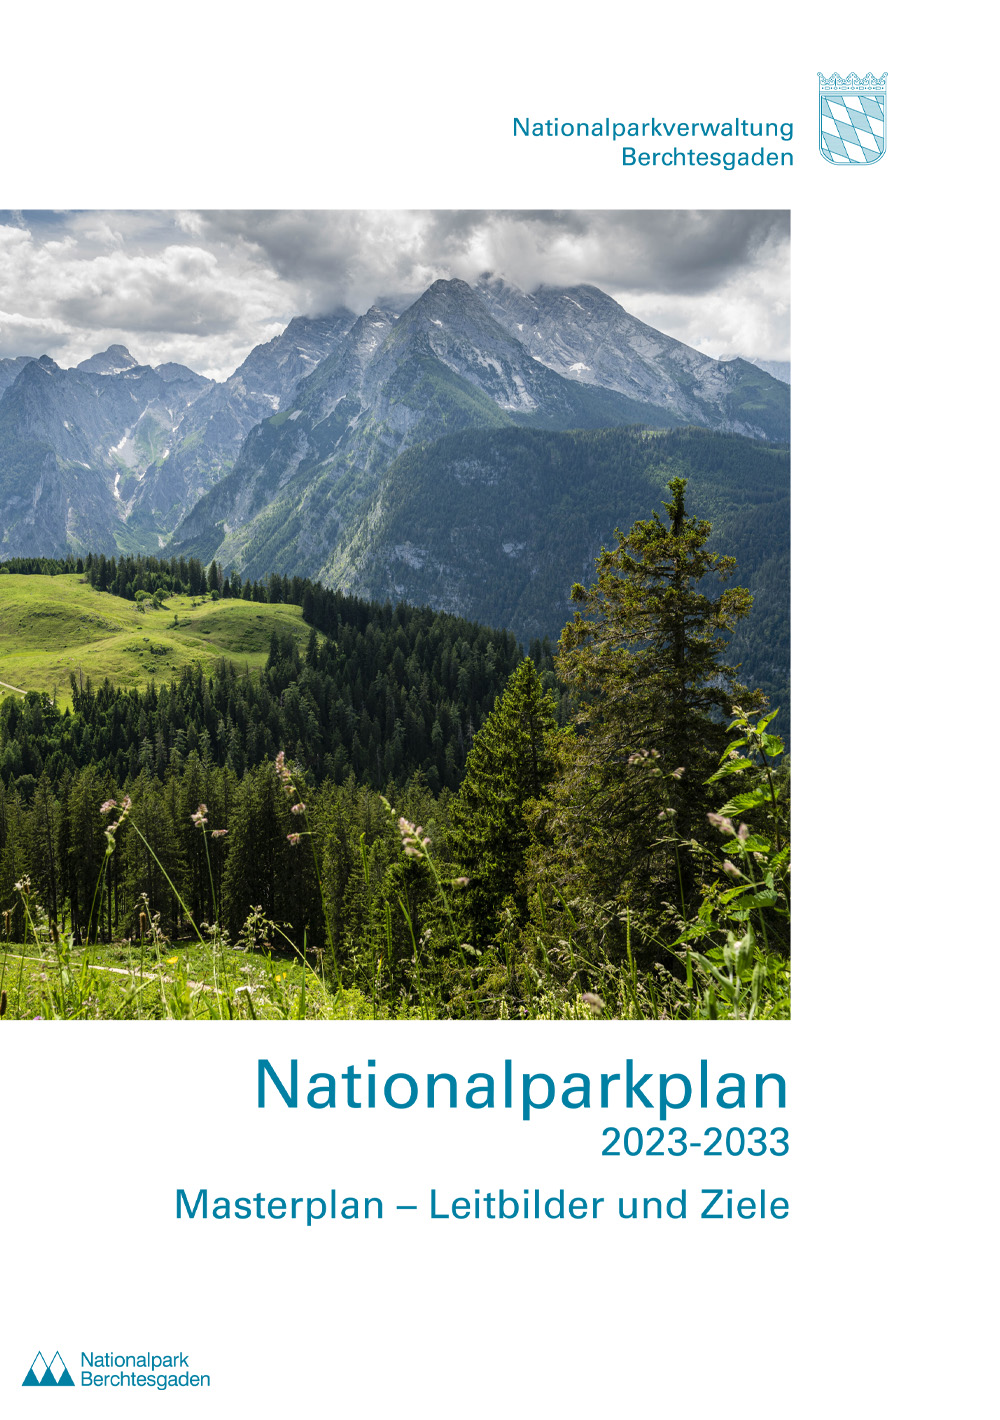 National Park Plan